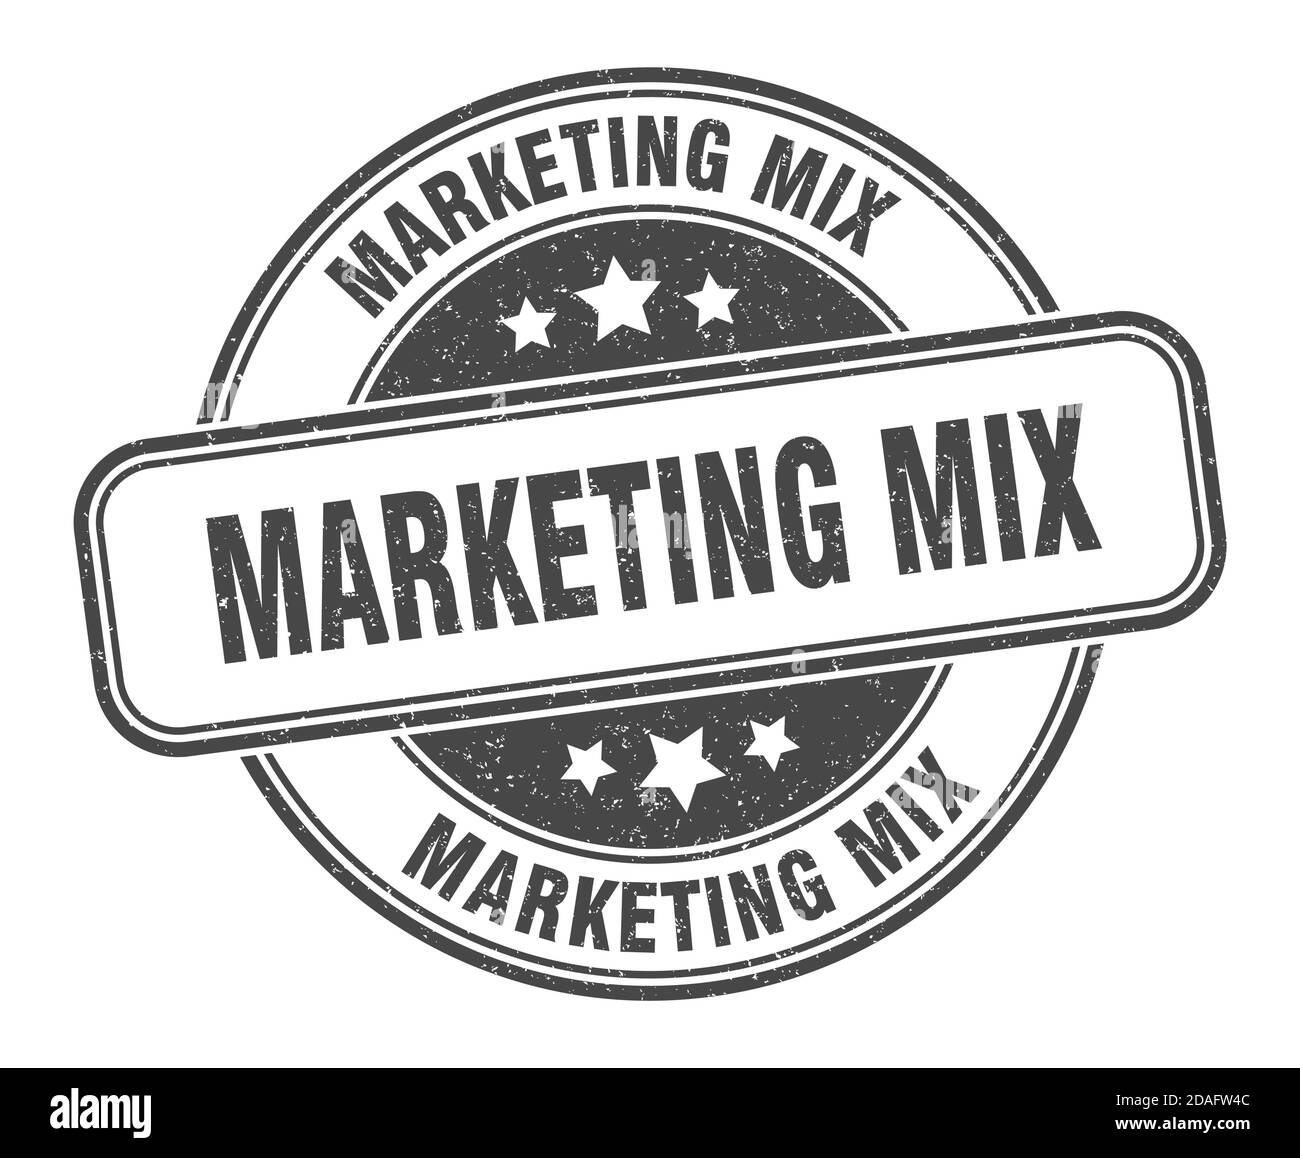 marketing mix stamp. marketing mix sign. round grunge label Stock Vector  Image & Art - Alamy